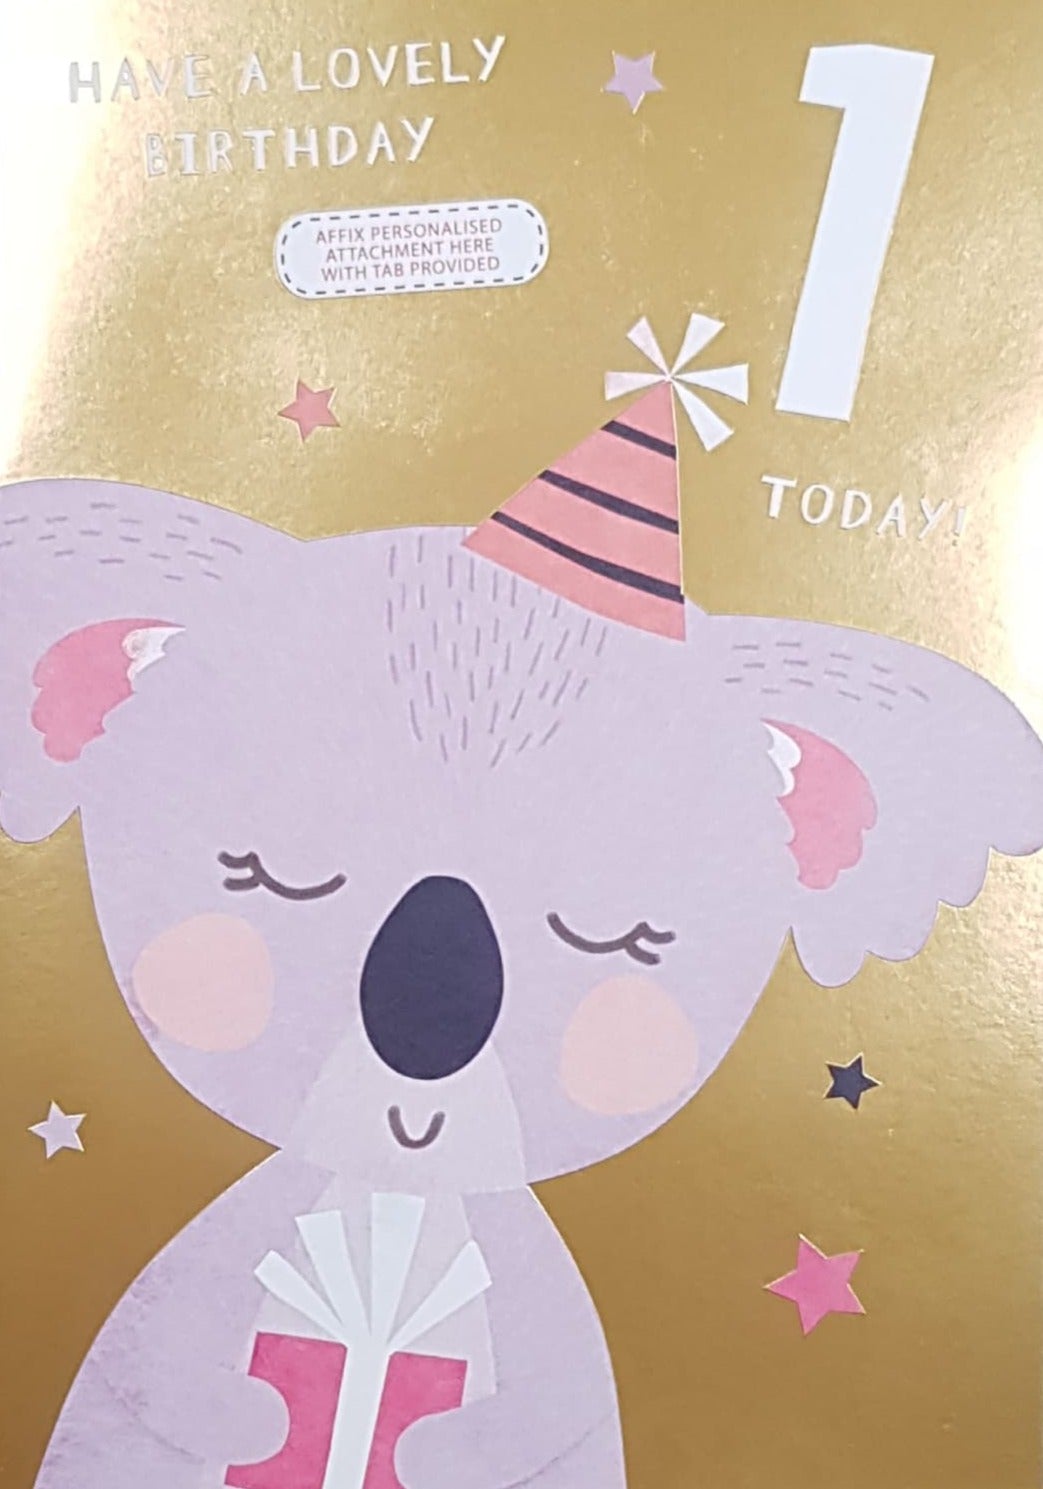 Personalised Card - Age 1 Birthday Card / A Cute Koala